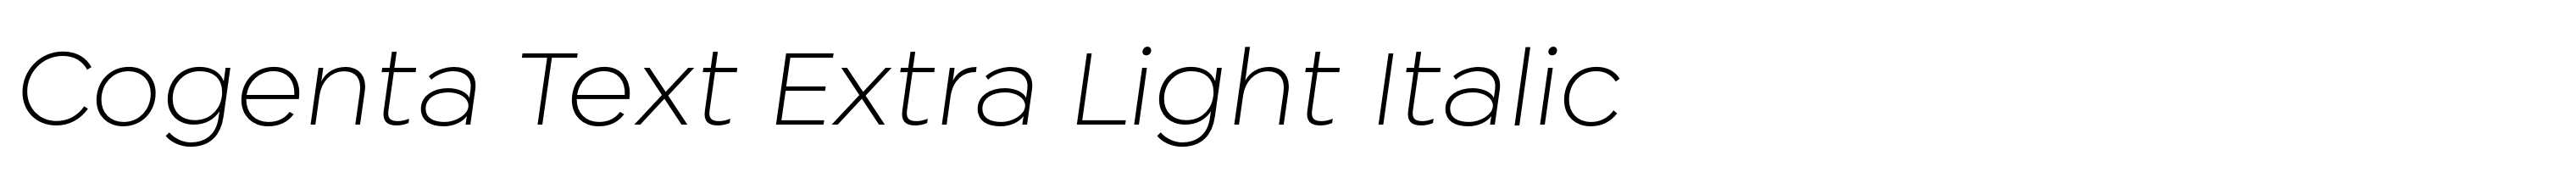 Cogenta Text Extra Light Italic